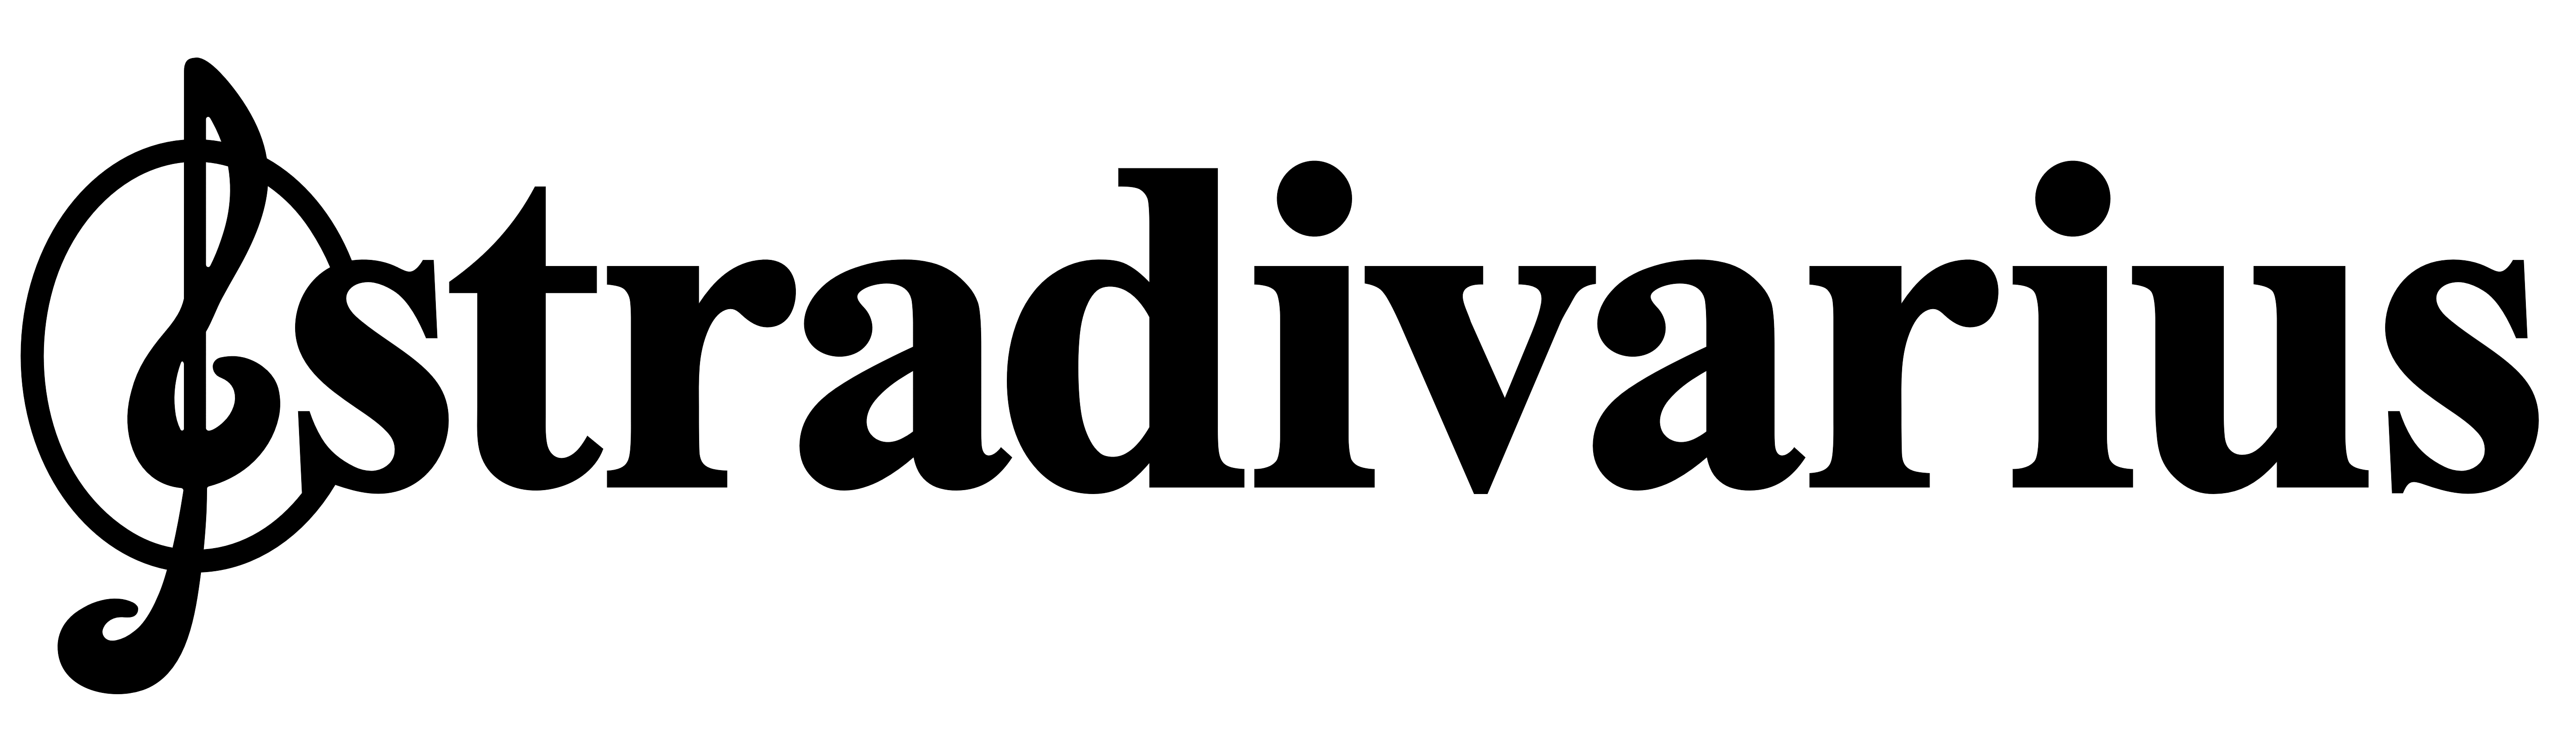 Stradivarius logo, logotype